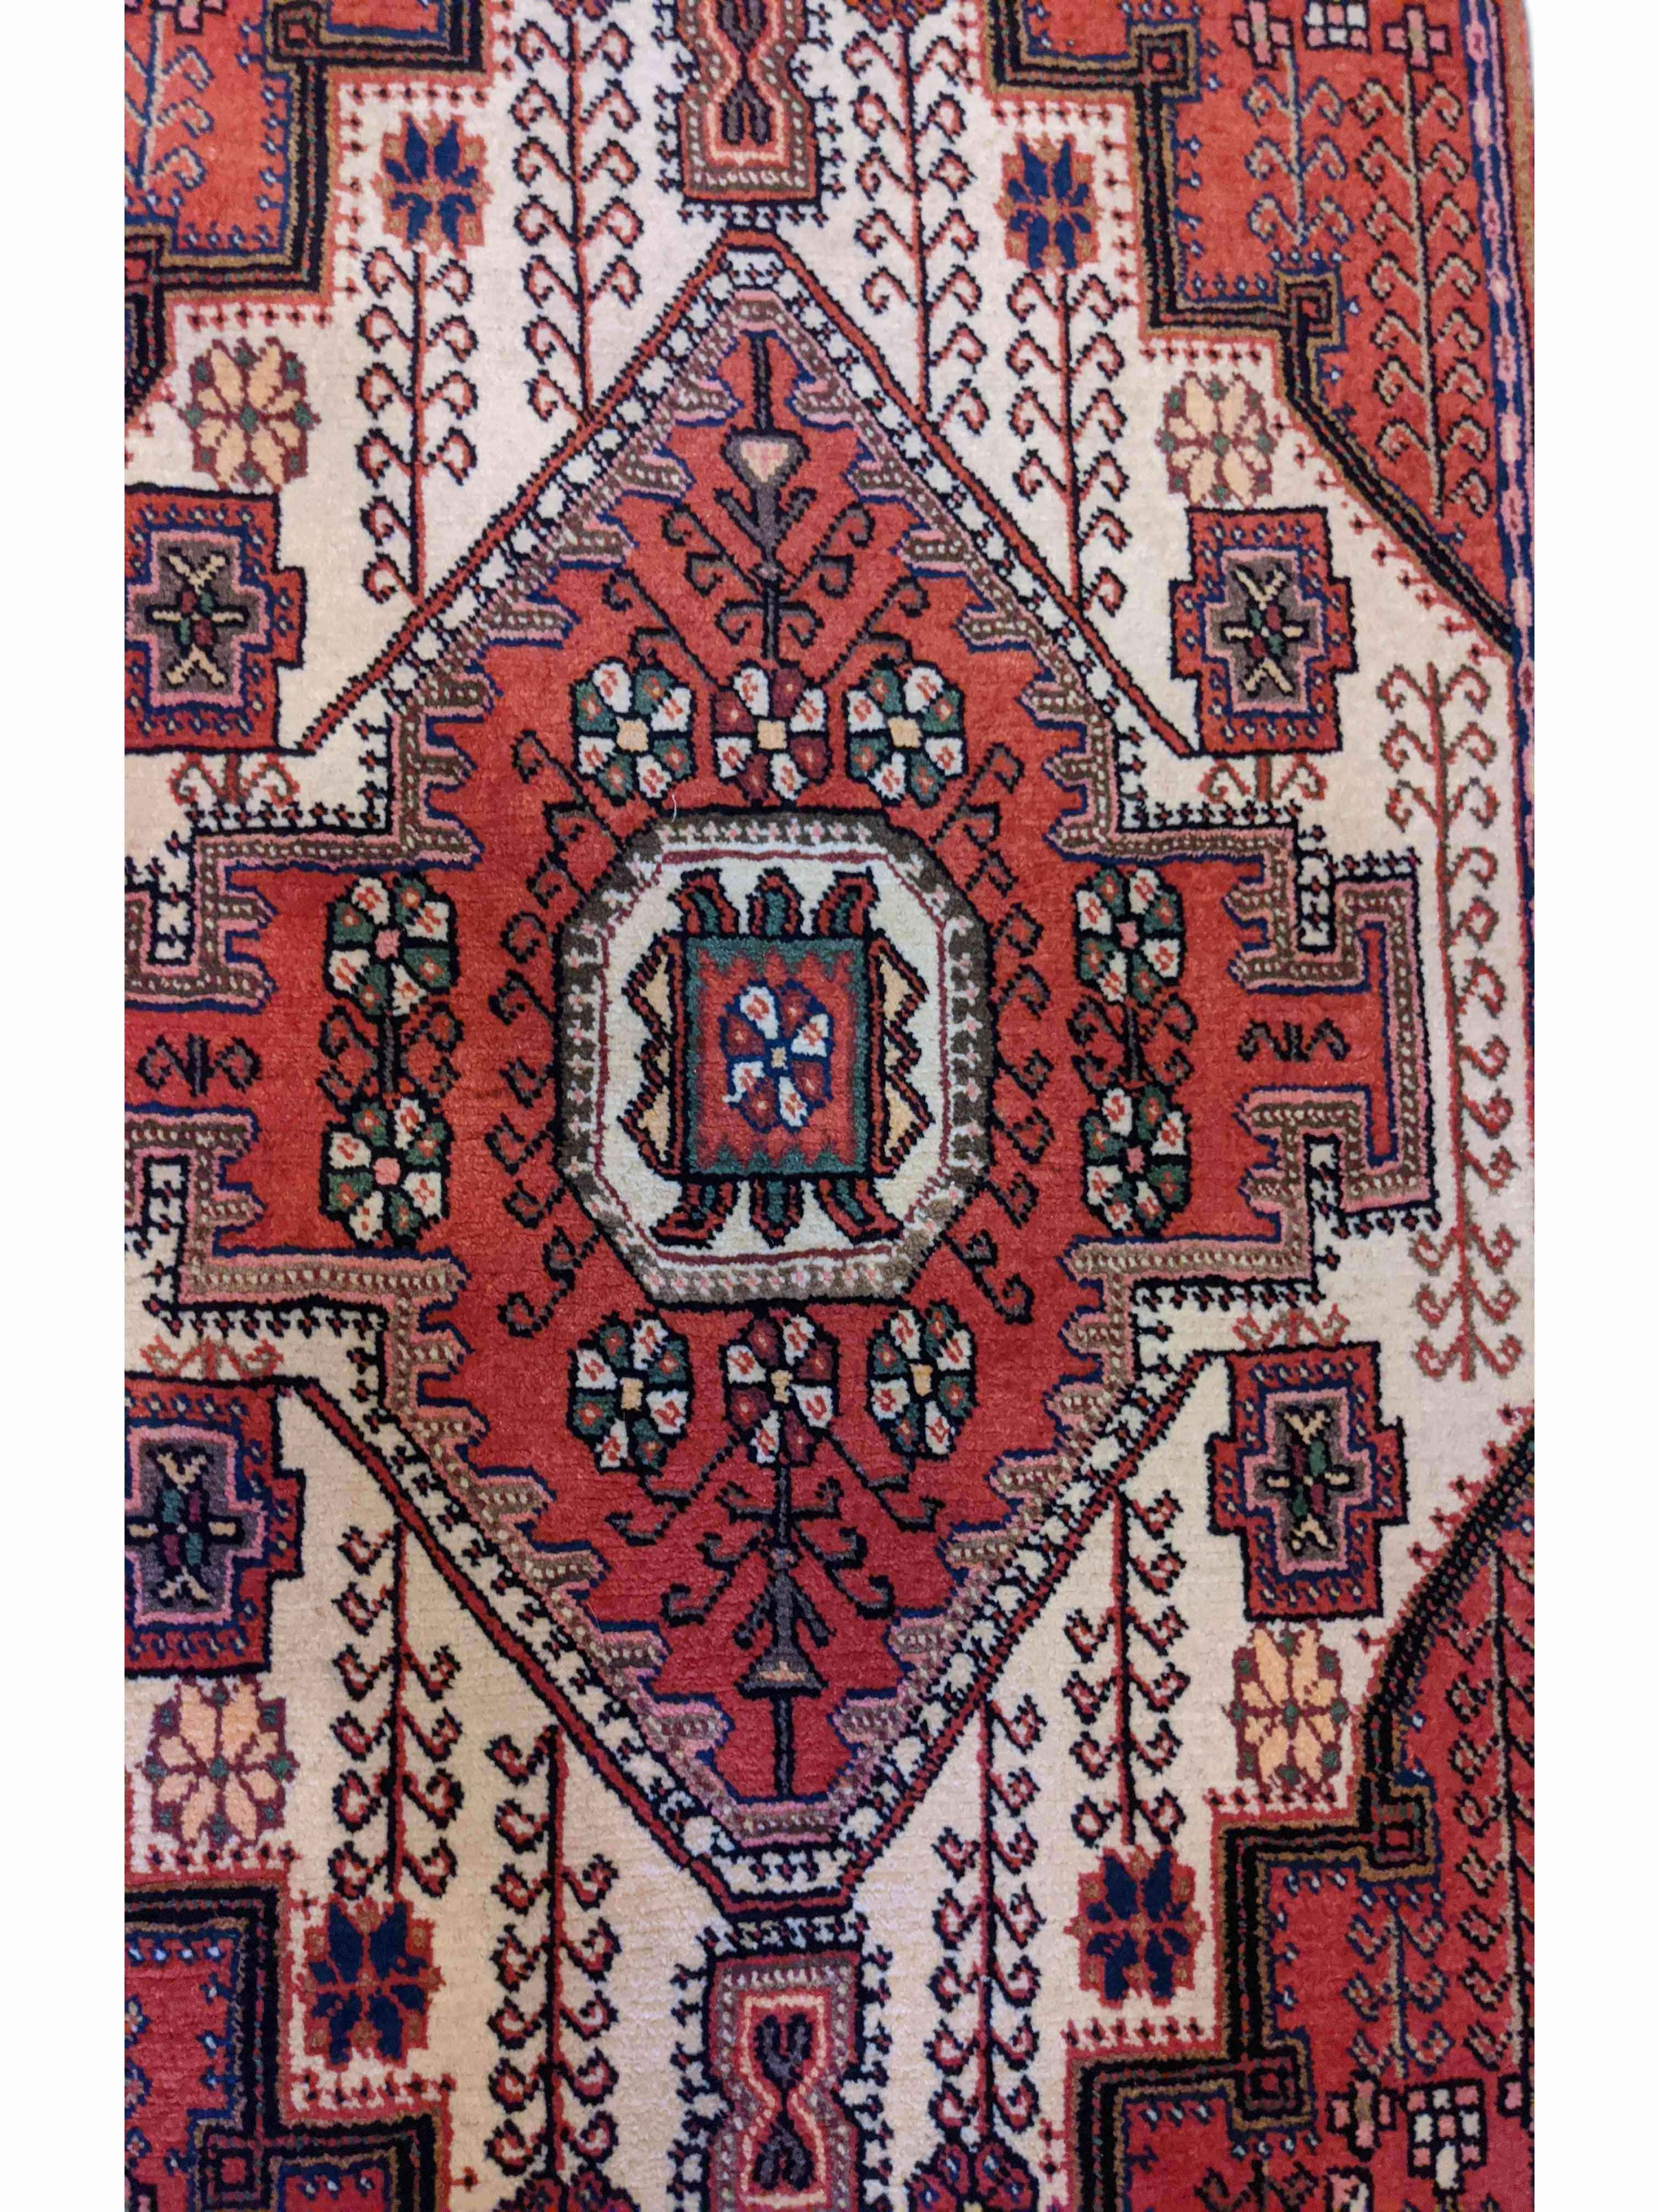 150 x 110 cm Persian Hamadan Traditional Terracotta Rug - Rugmaster